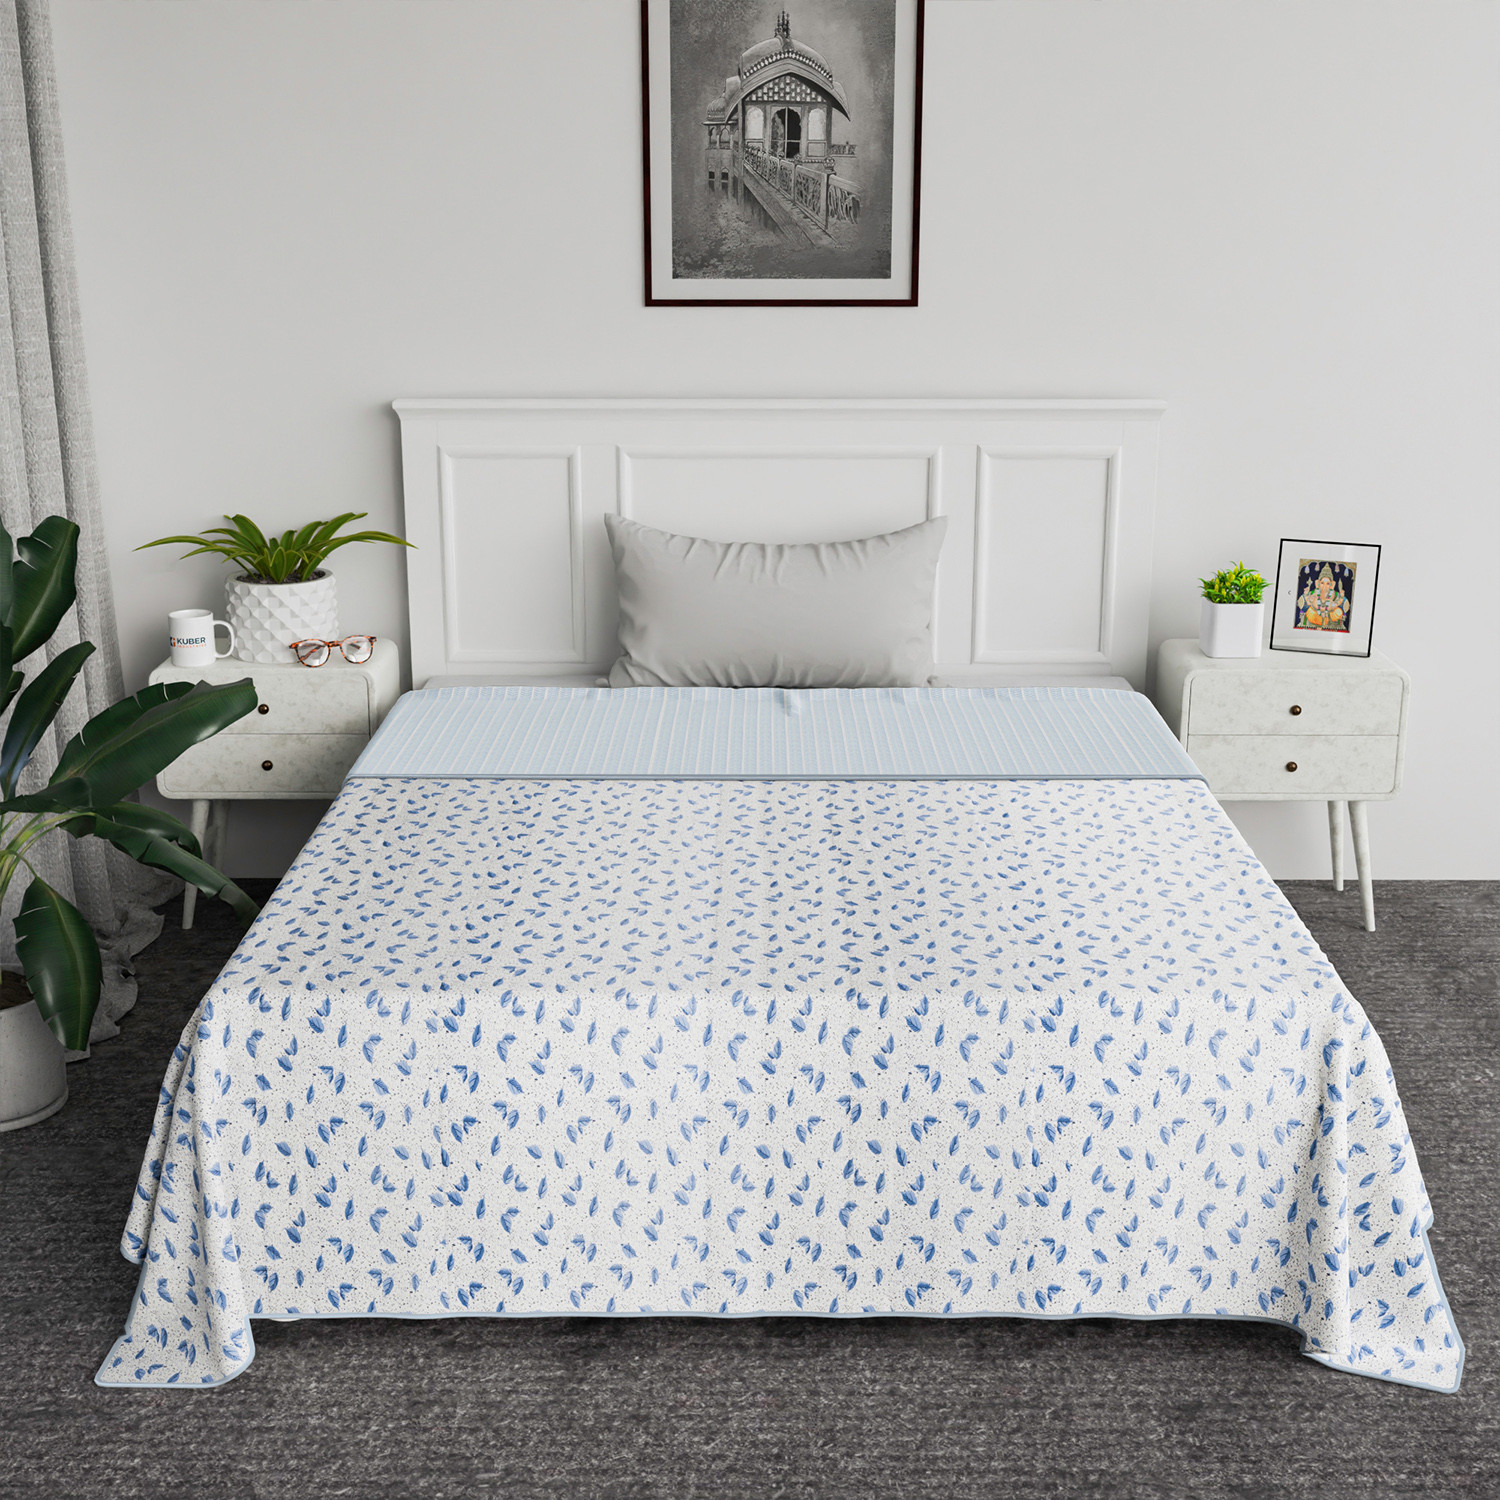 Kuber Industries Blanket | Cotton Single Bed Dohar | Blanket For Home | Reversible AC Blanket For Travelling | Blanket For Summer | Blanket For Winters | Leaf Print | Blue